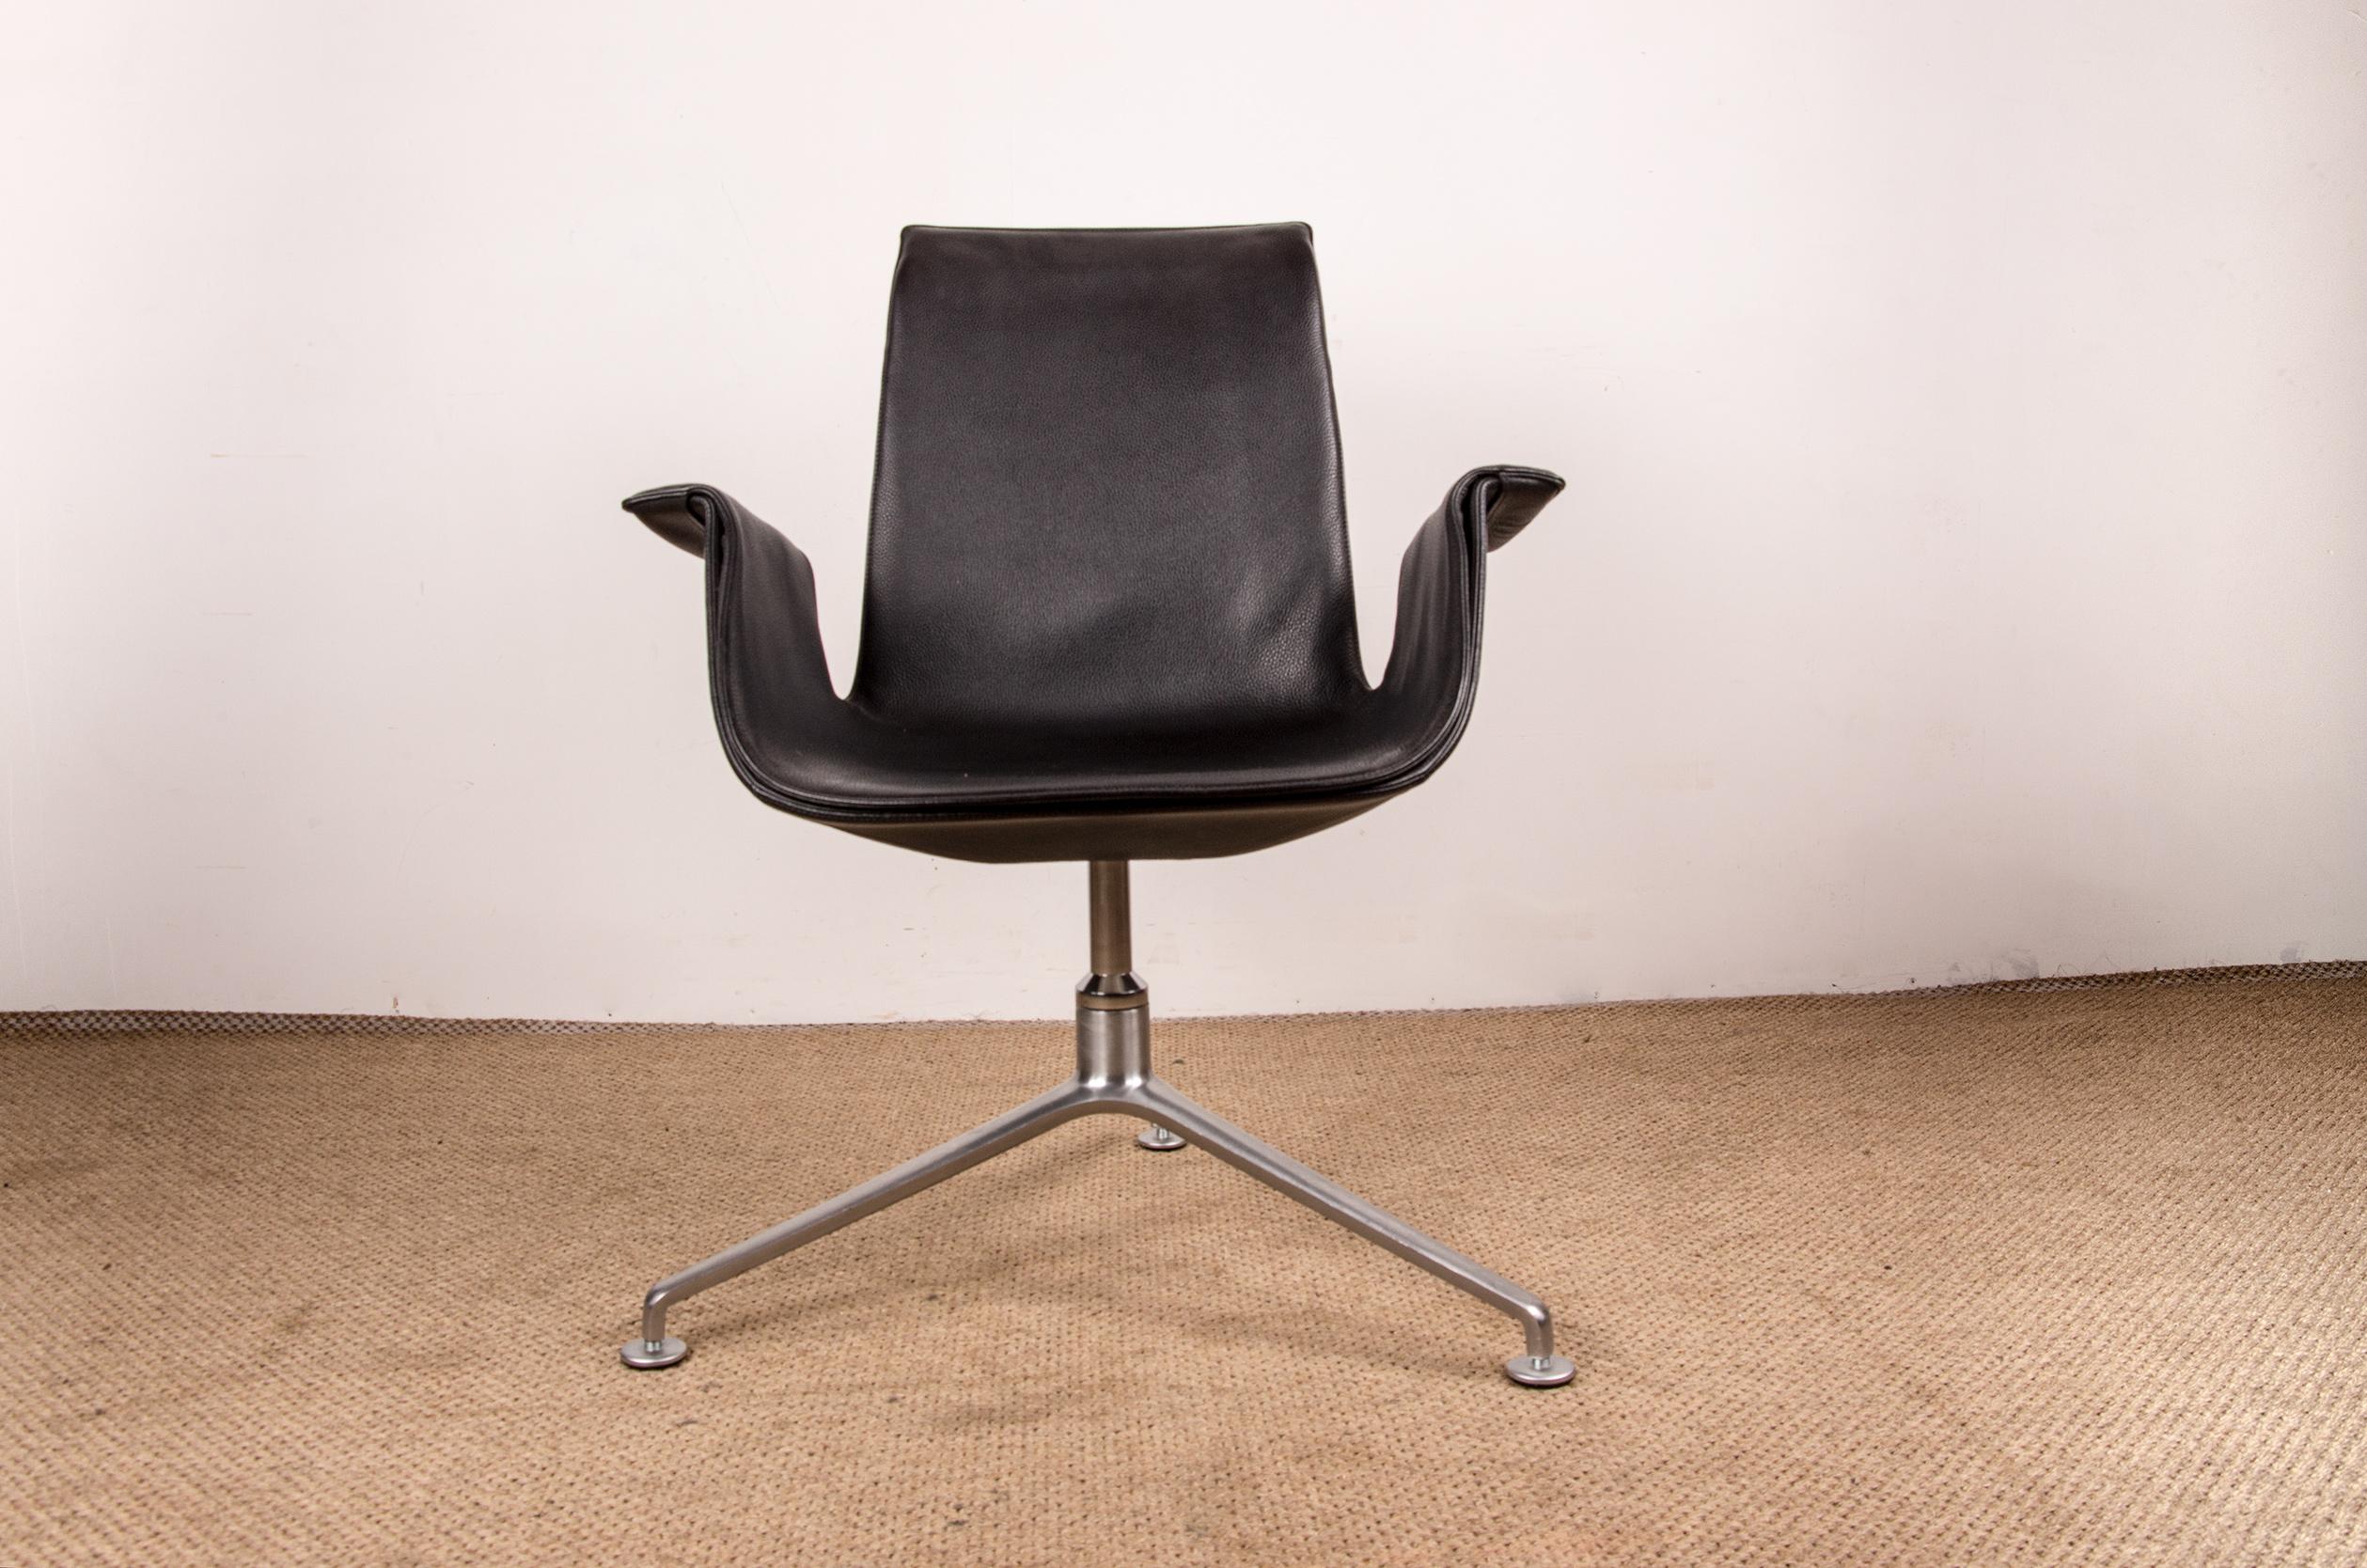 Dänischer Sessel, schwarzes Leder und verchromter Stahl, Modell FK 6725 Fabricius/Knoll. (Skandinavische Moderne) im Angebot